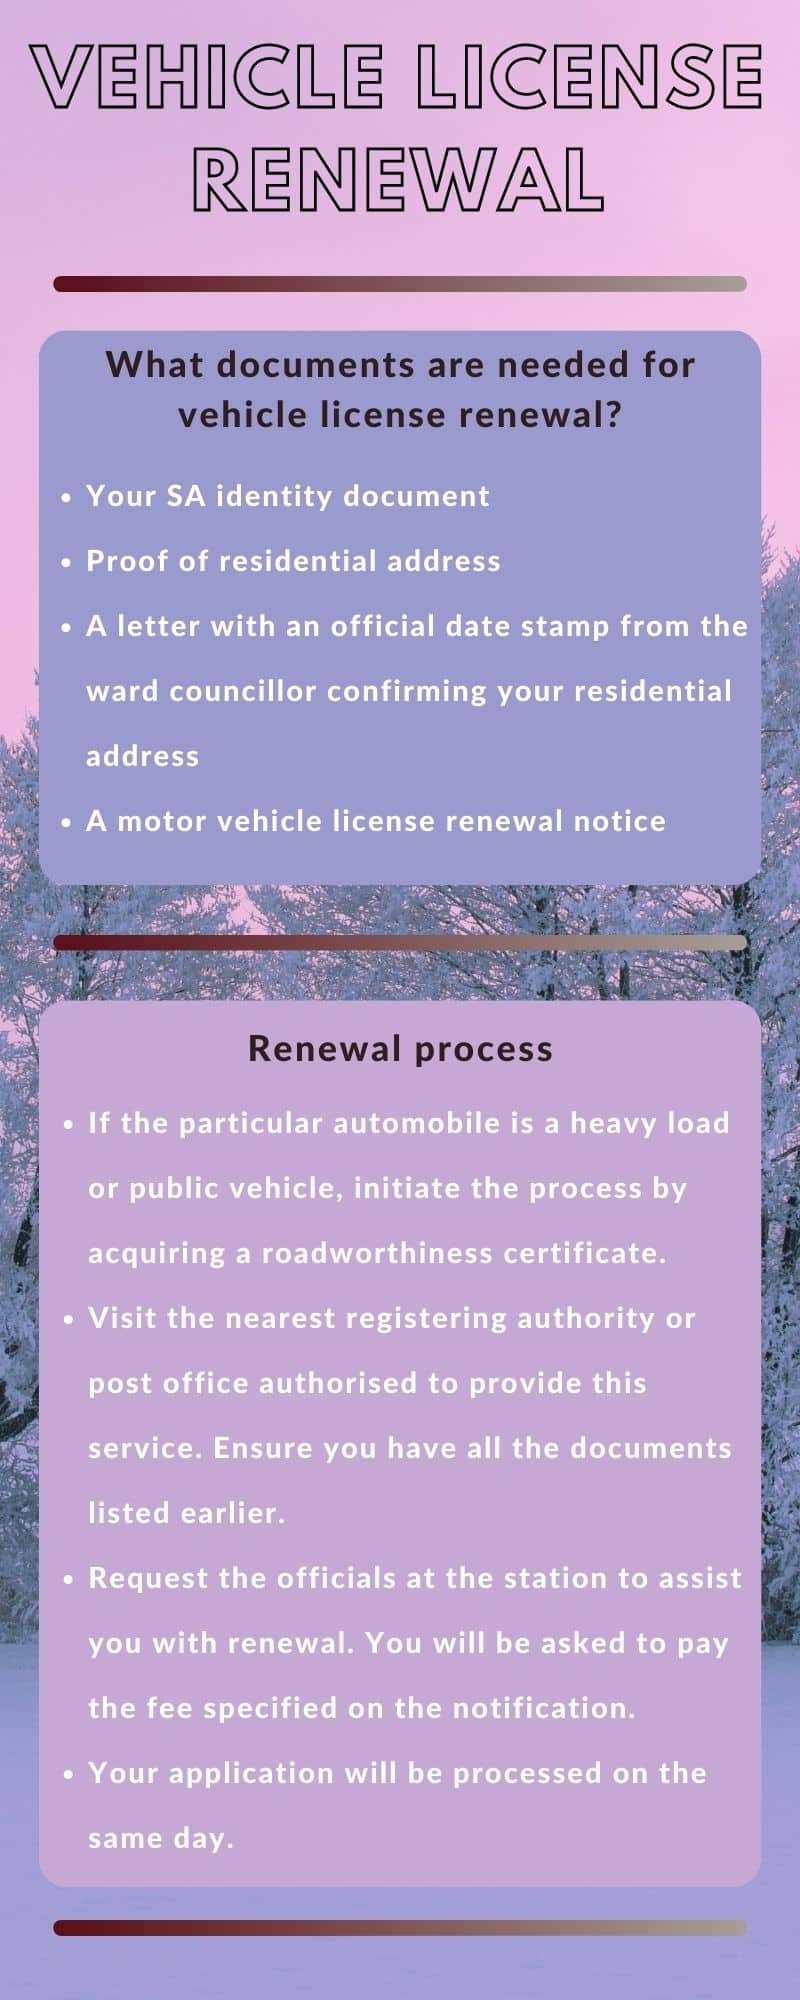 Vehicle license renewal